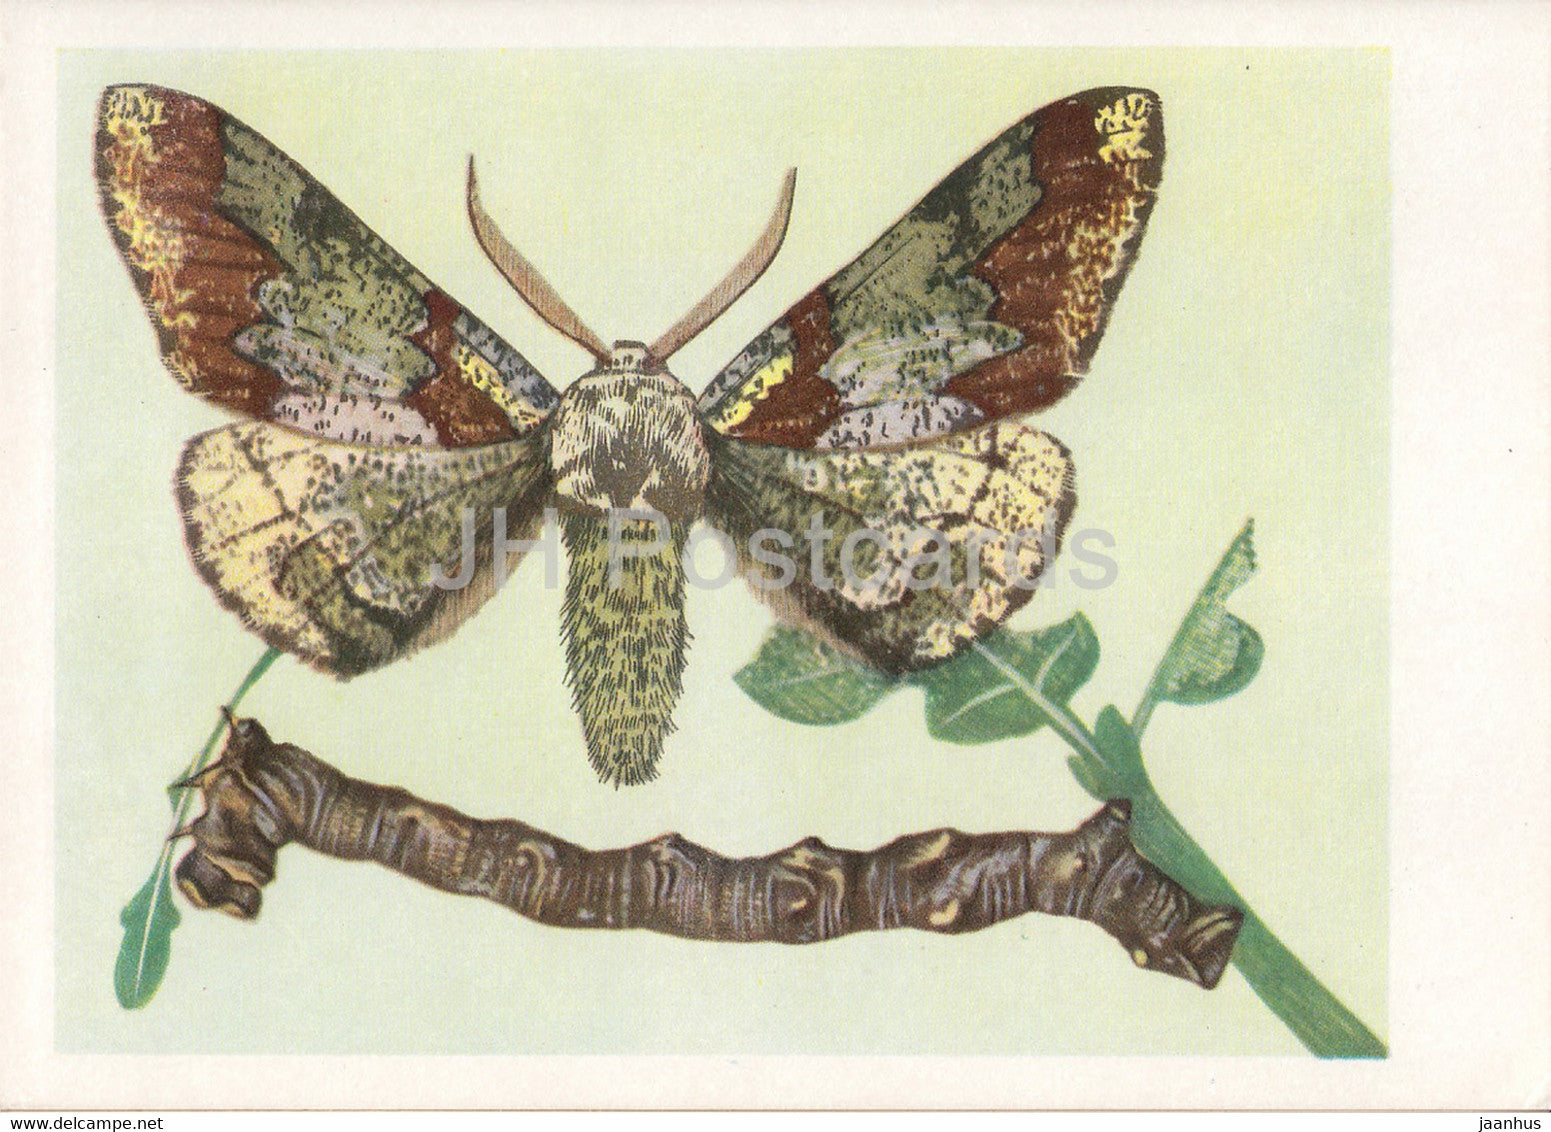 Krepak nawierzbek - Oak beauty - Biston strataria - moth - insects - illustration - Poland - unused - JH Postcards